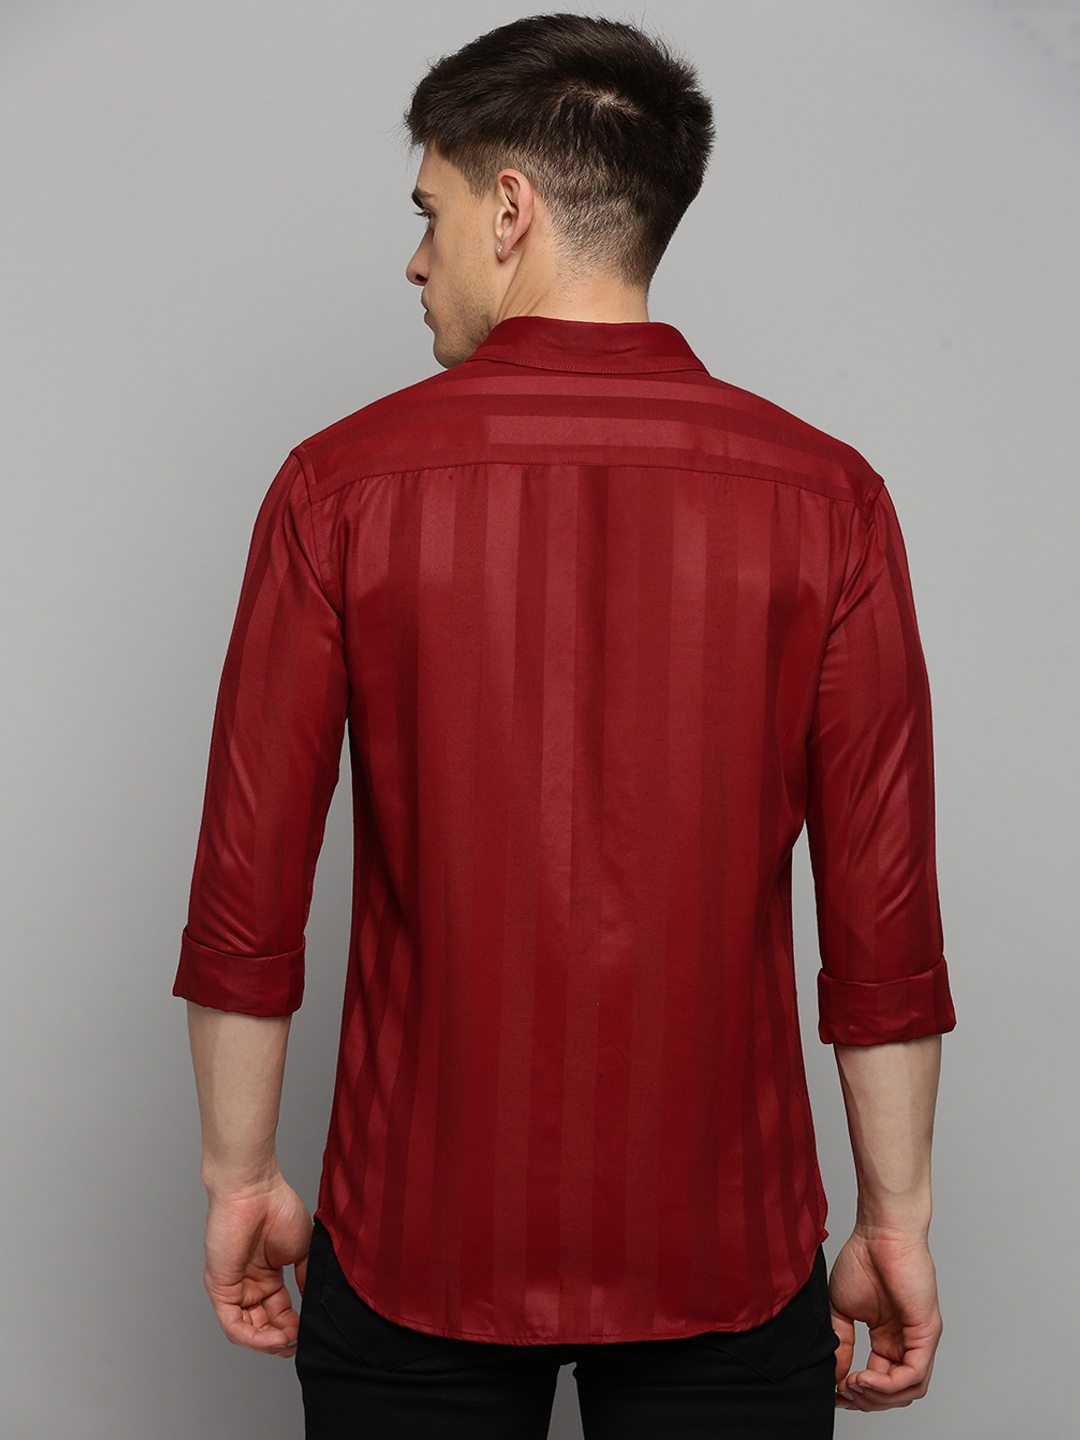 Showoff | SHOWOFF Men's Spread Collar Solid Maroon Classic Shirt 3